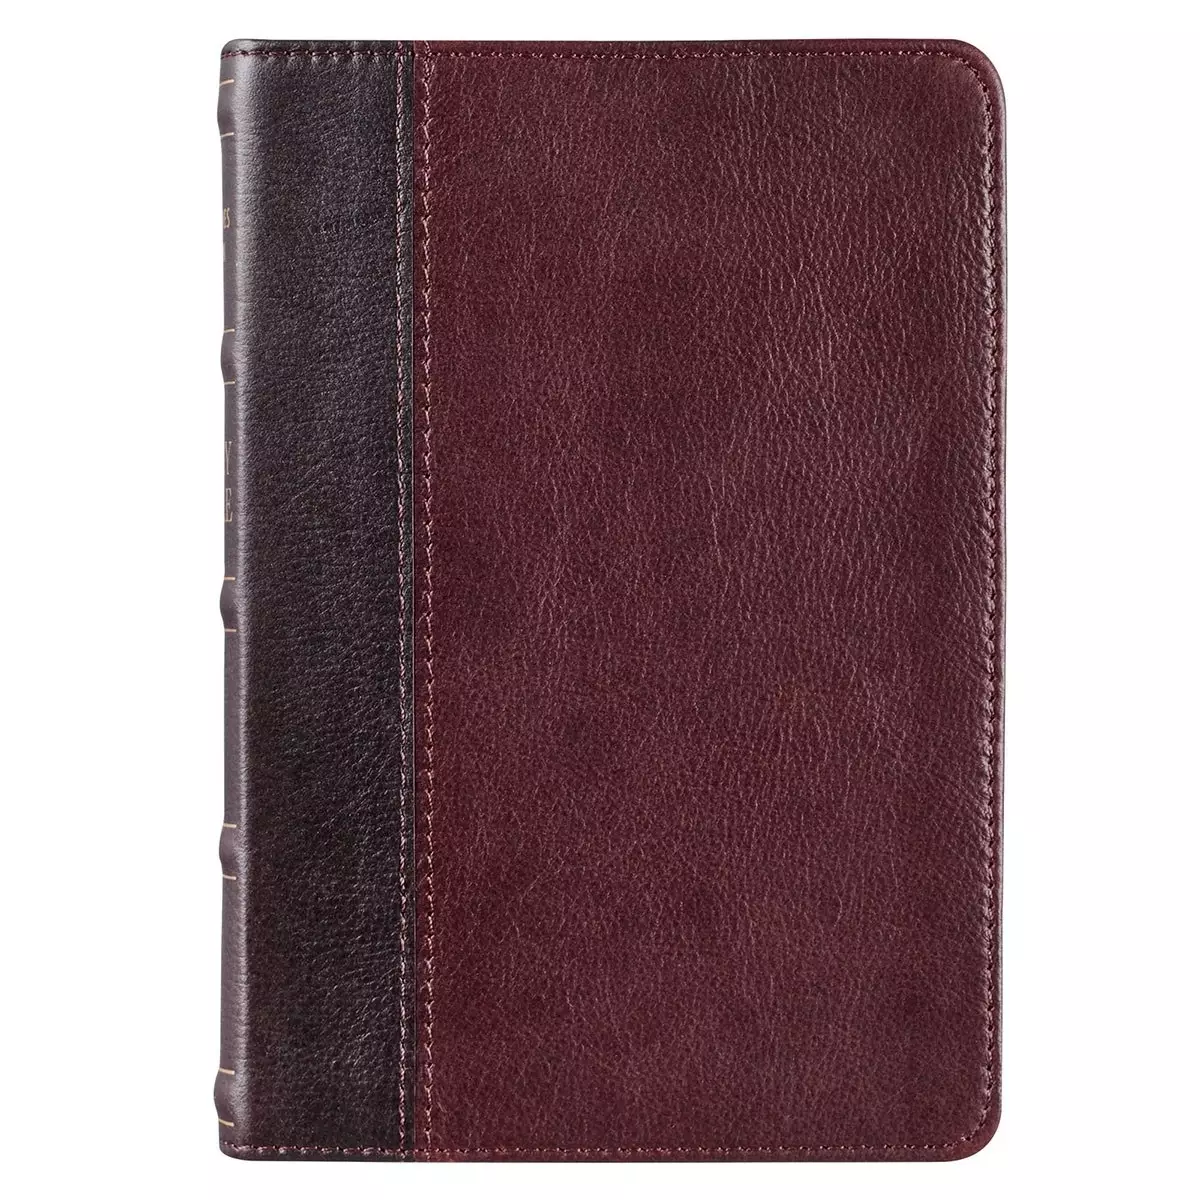 KJV Bible Compact Full-grain Leather, Burgundy/Mahogany